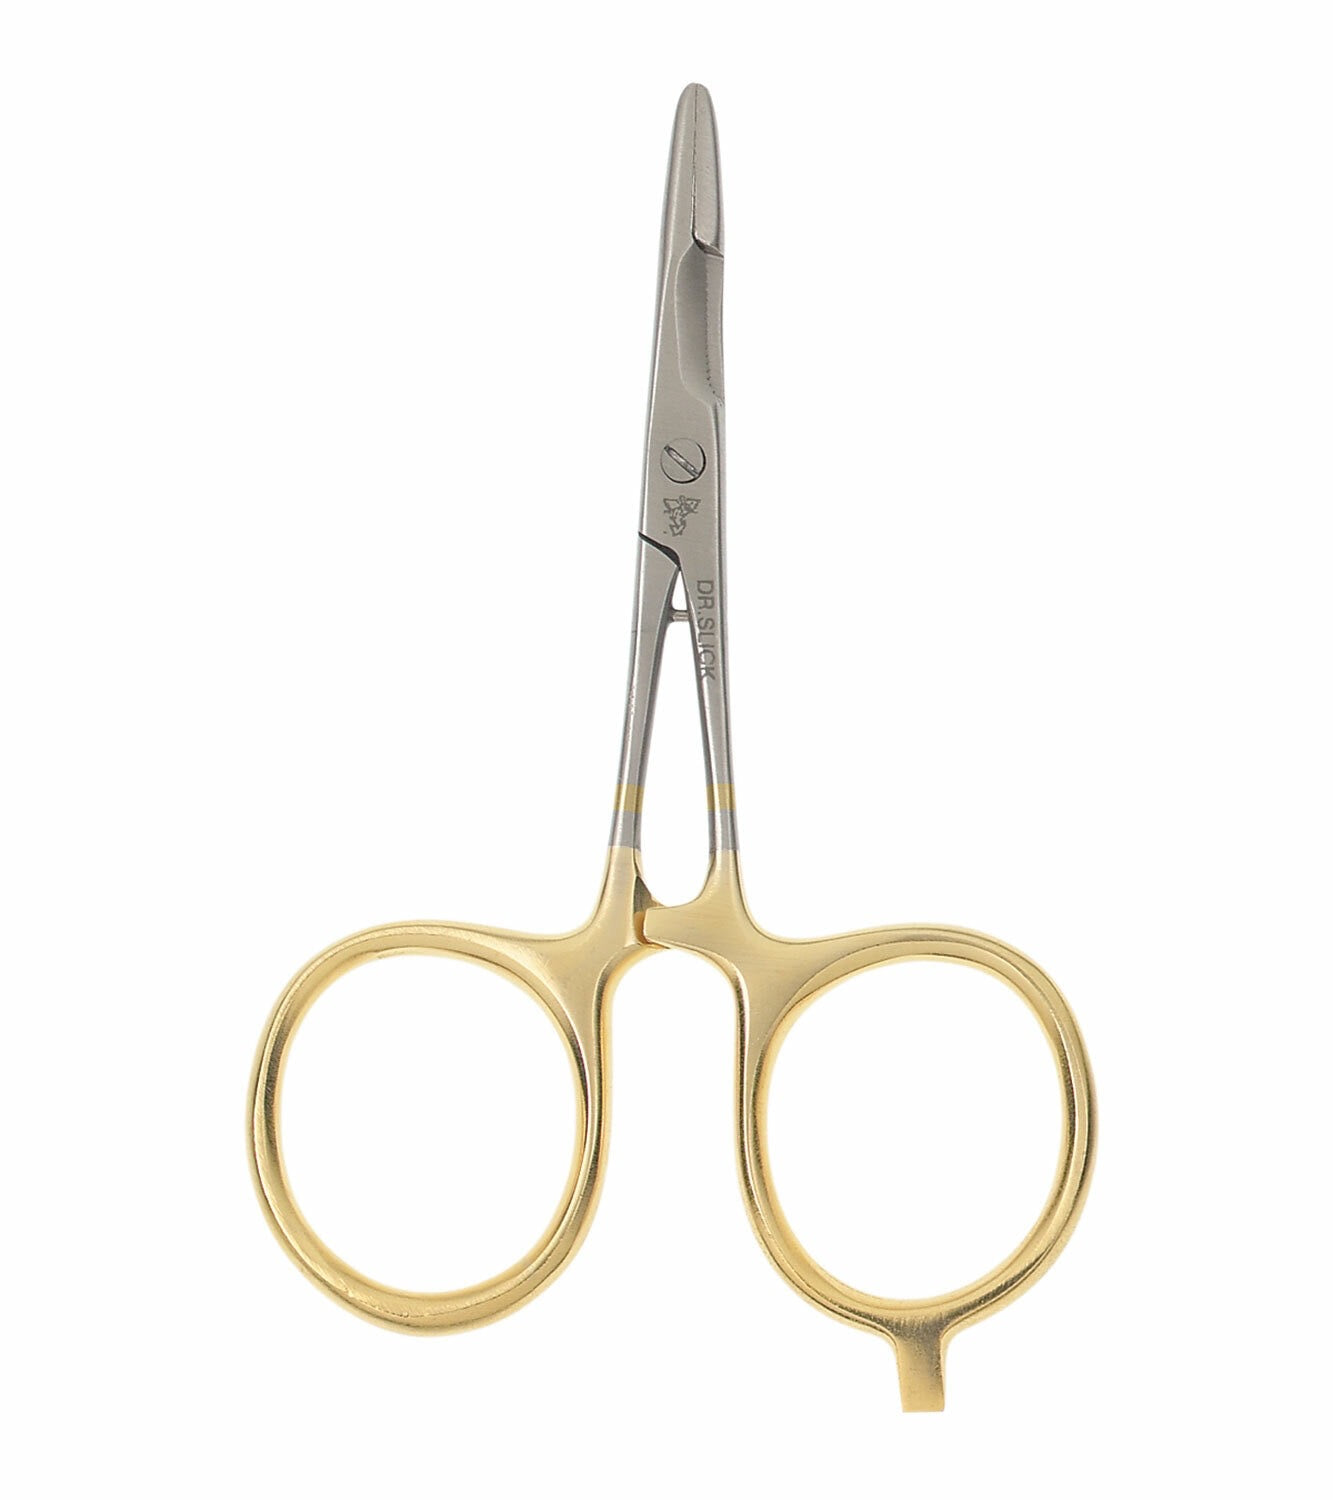 Dr. Slick Scissor Clamp Gold Loops Straight Blades, 5.5